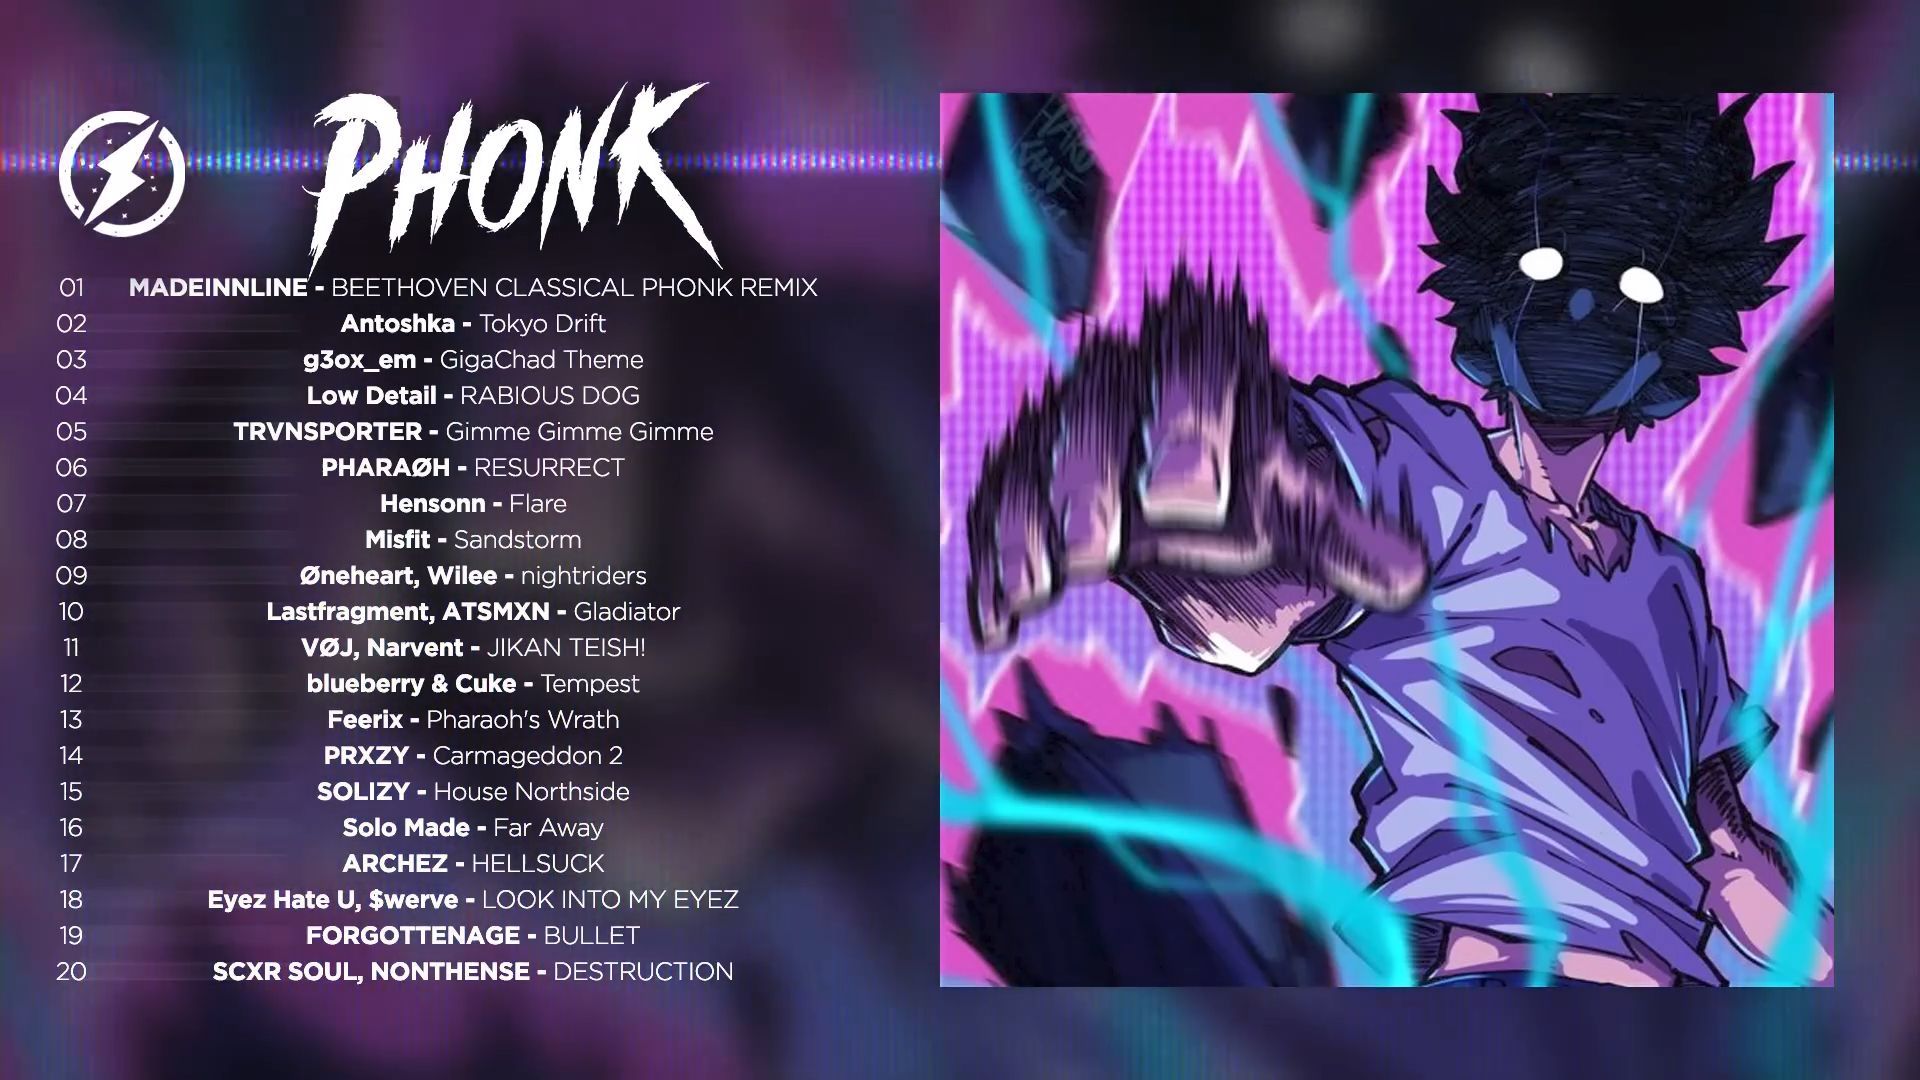 Phonk Music 2023 🔥 Aggressive Drift Phonk Songs